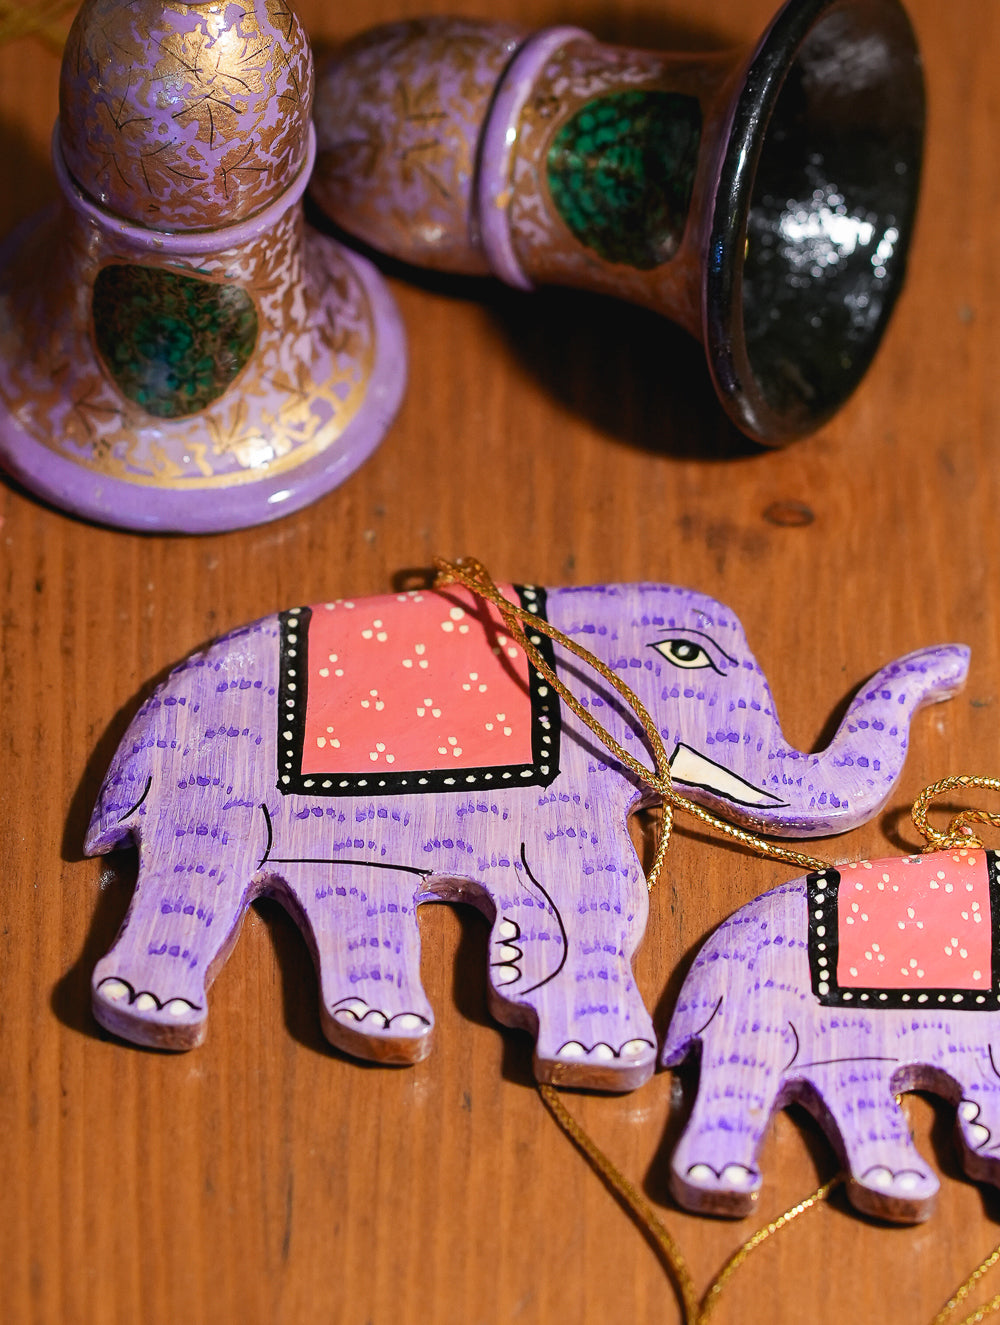 Load image into Gallery viewer, Kashmiri Art Xmas Decorations - Mauve Bells &amp; Elephants (Set of 5)